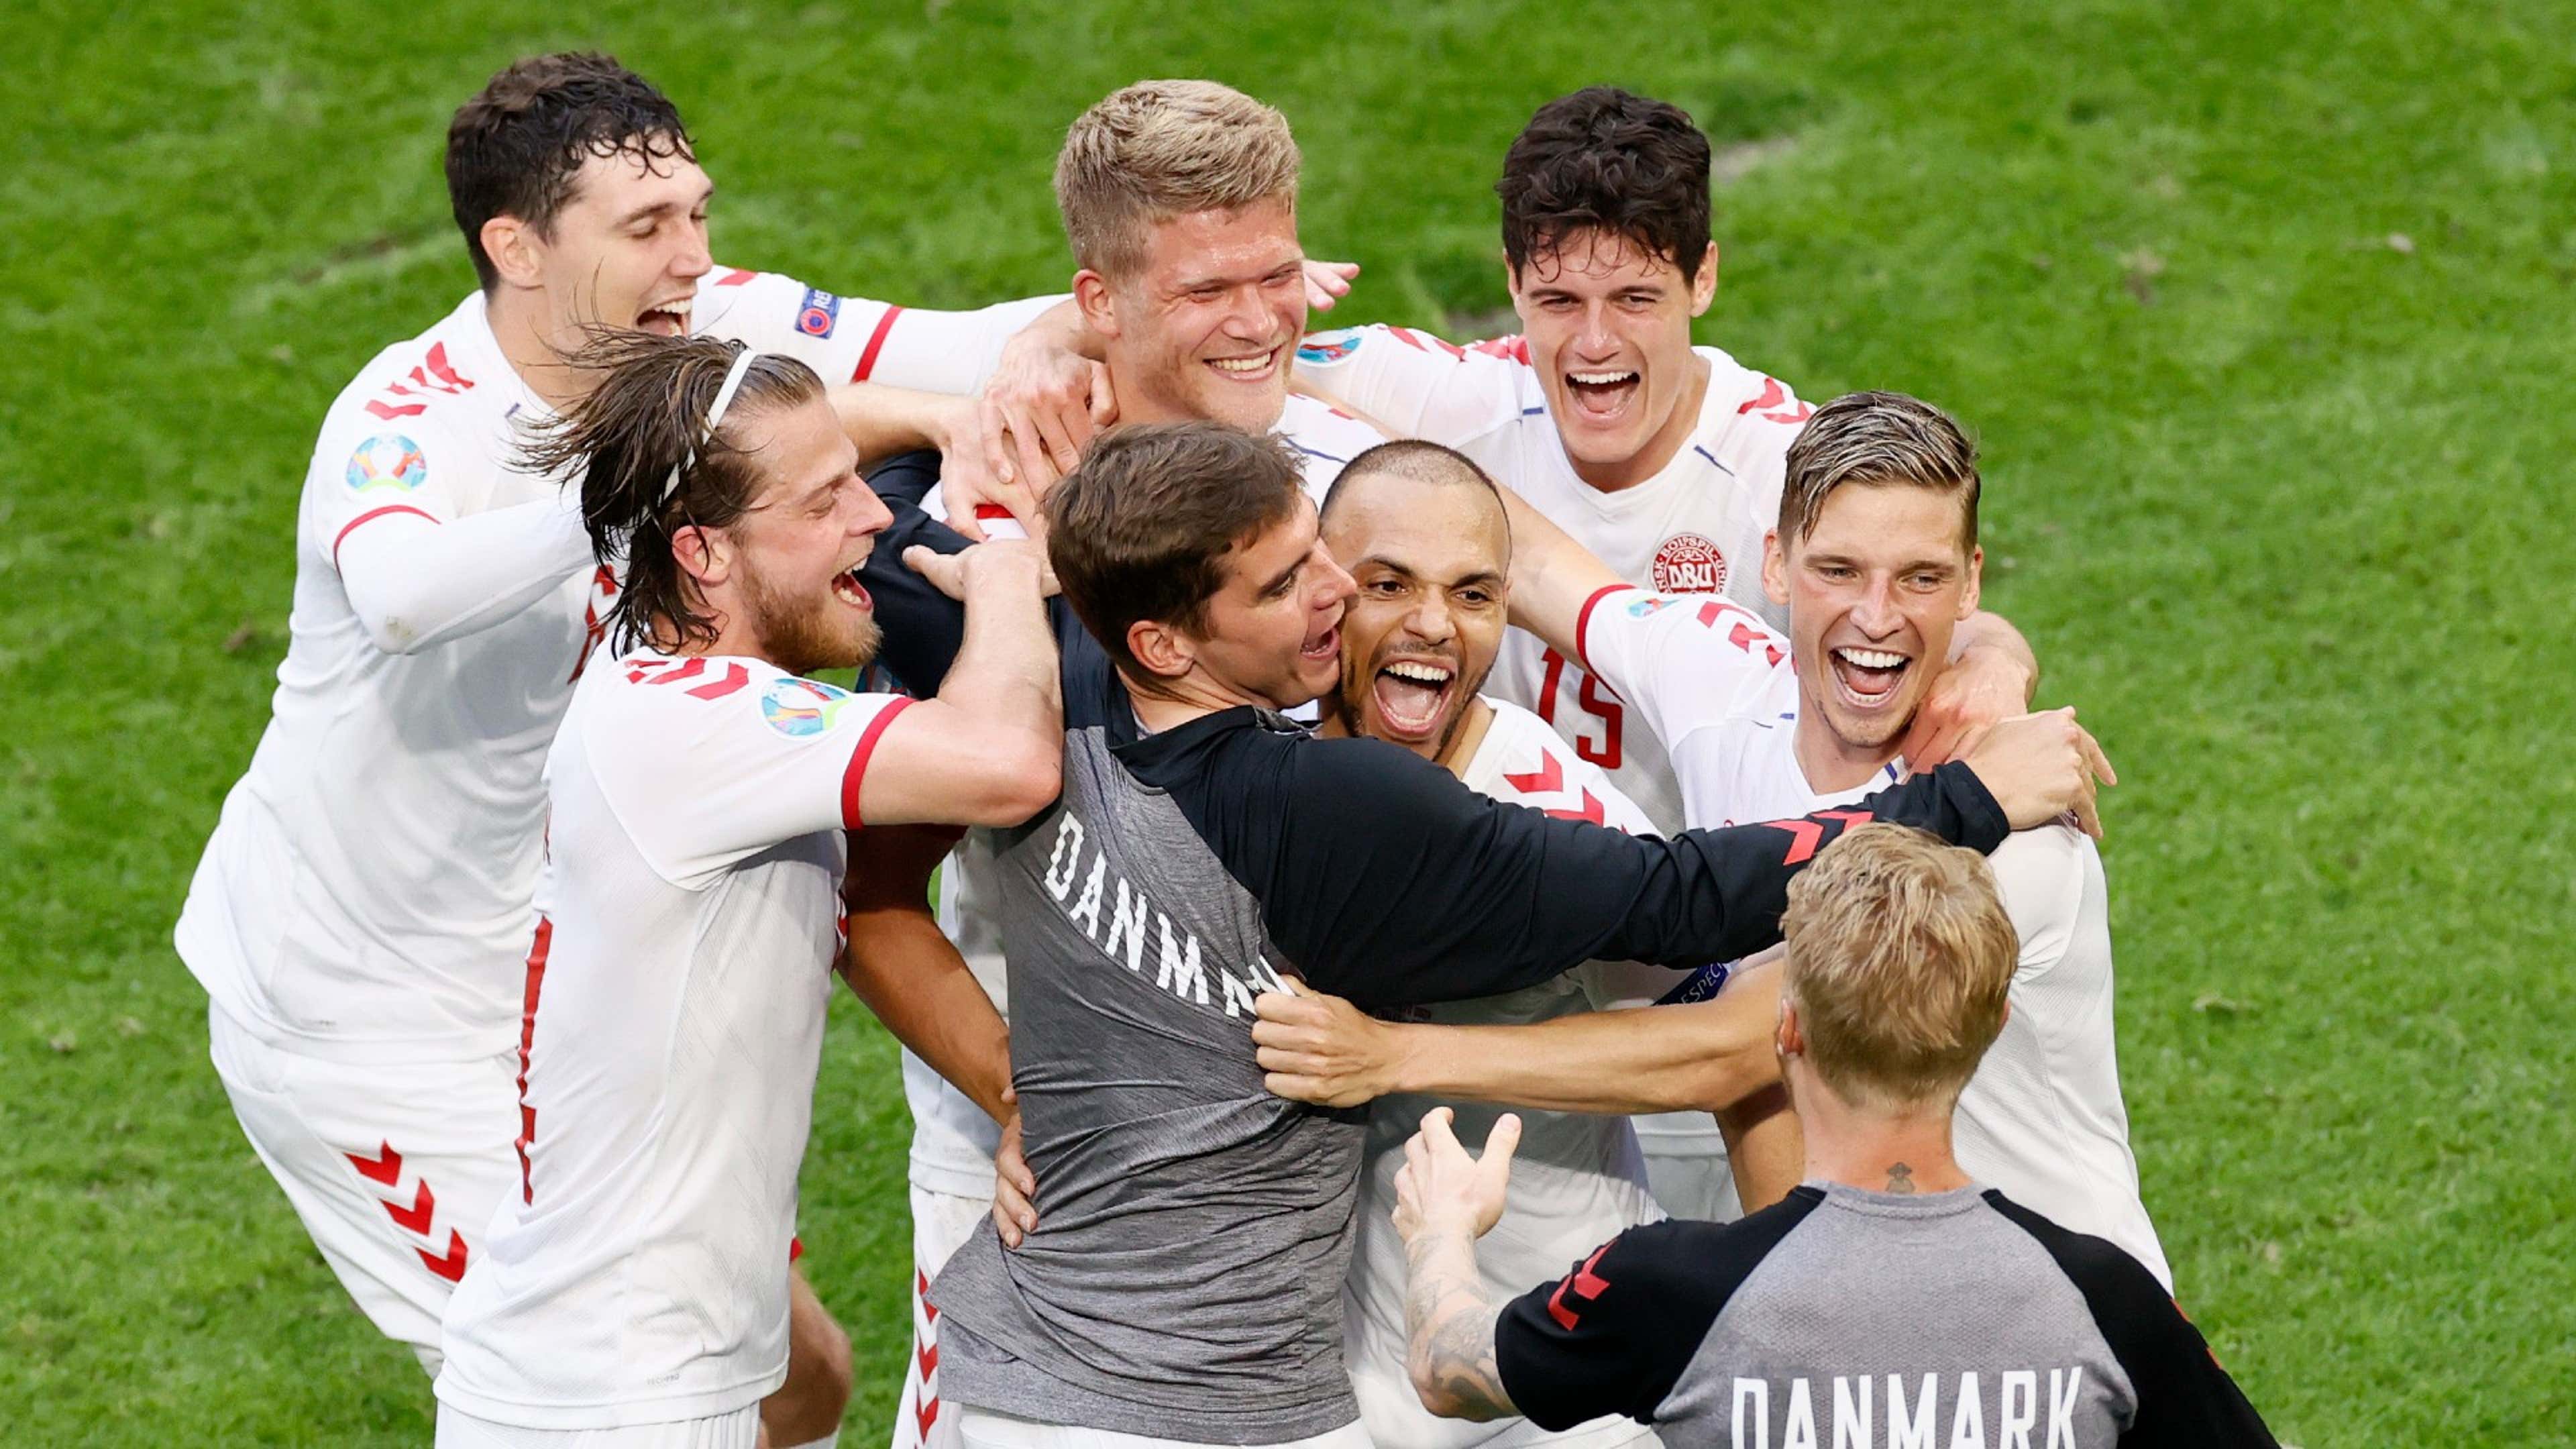 Arsenal vs Slavia Prague preview: How to watch on TV, live stream, team  news & prediction